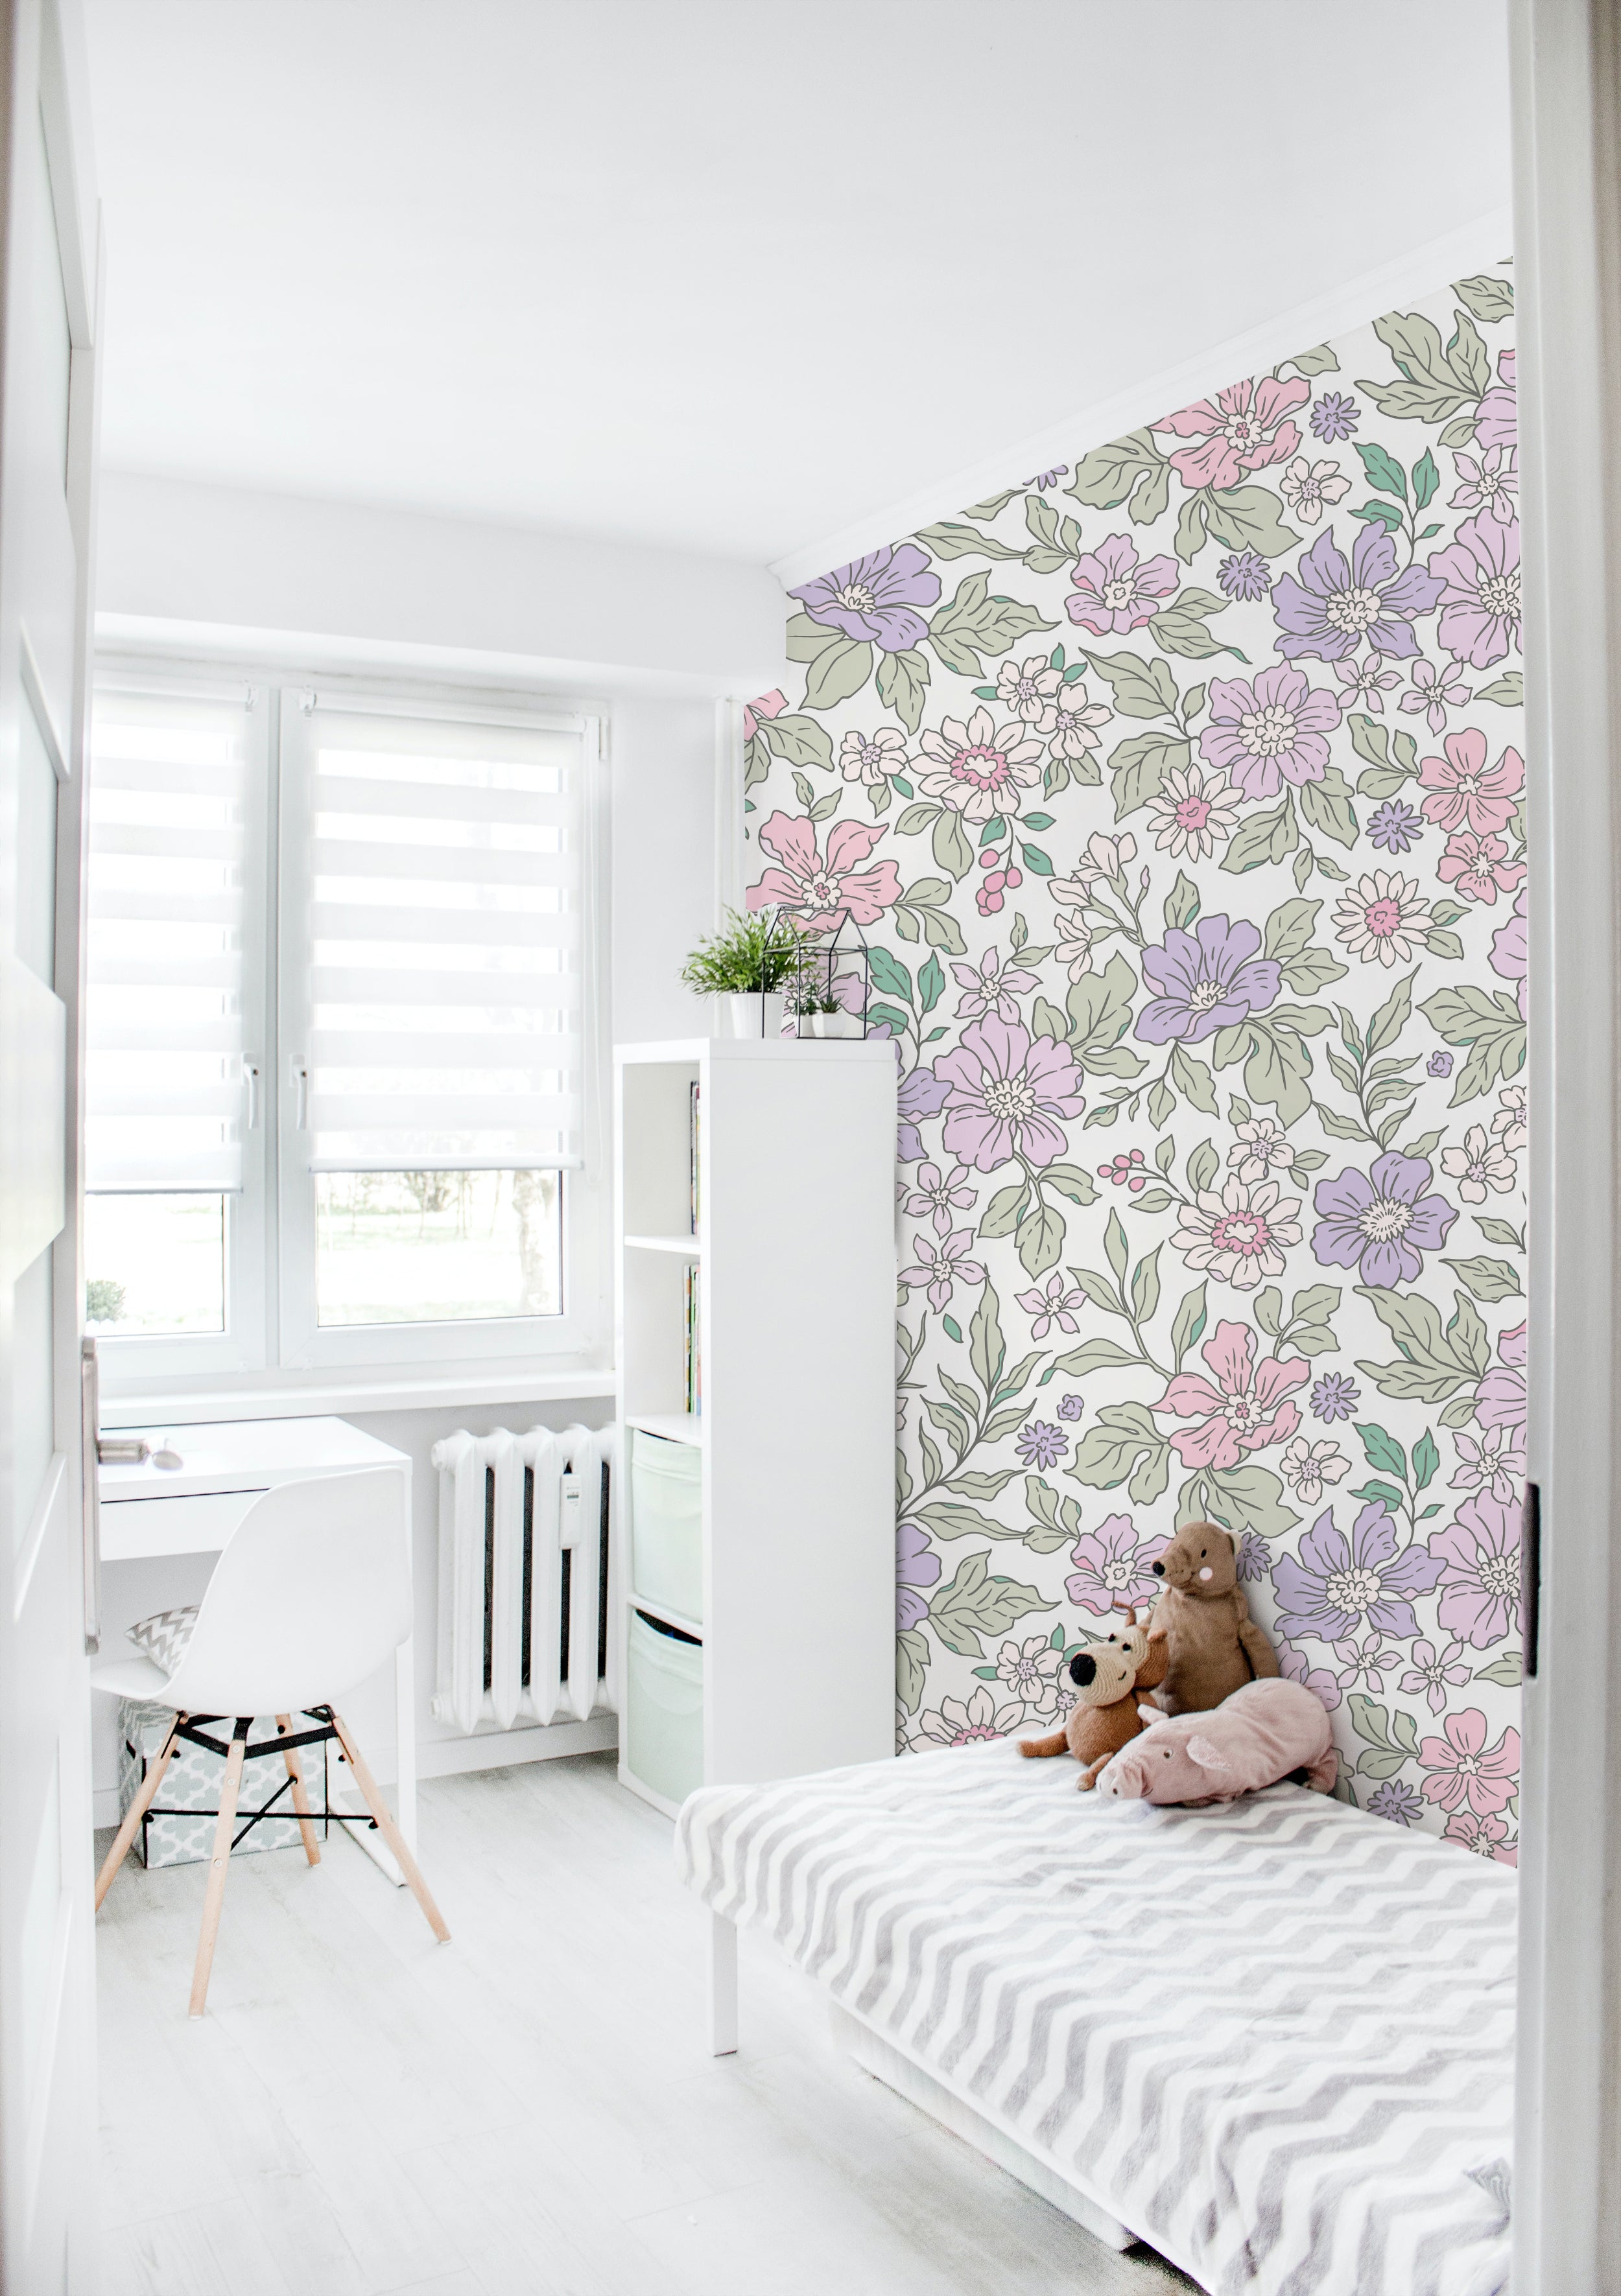 wallpaper, peel and stick wallpaper, home decor, Watercolor spring bird wallpaper, Living room wallpaper, Floral Wallpaper,